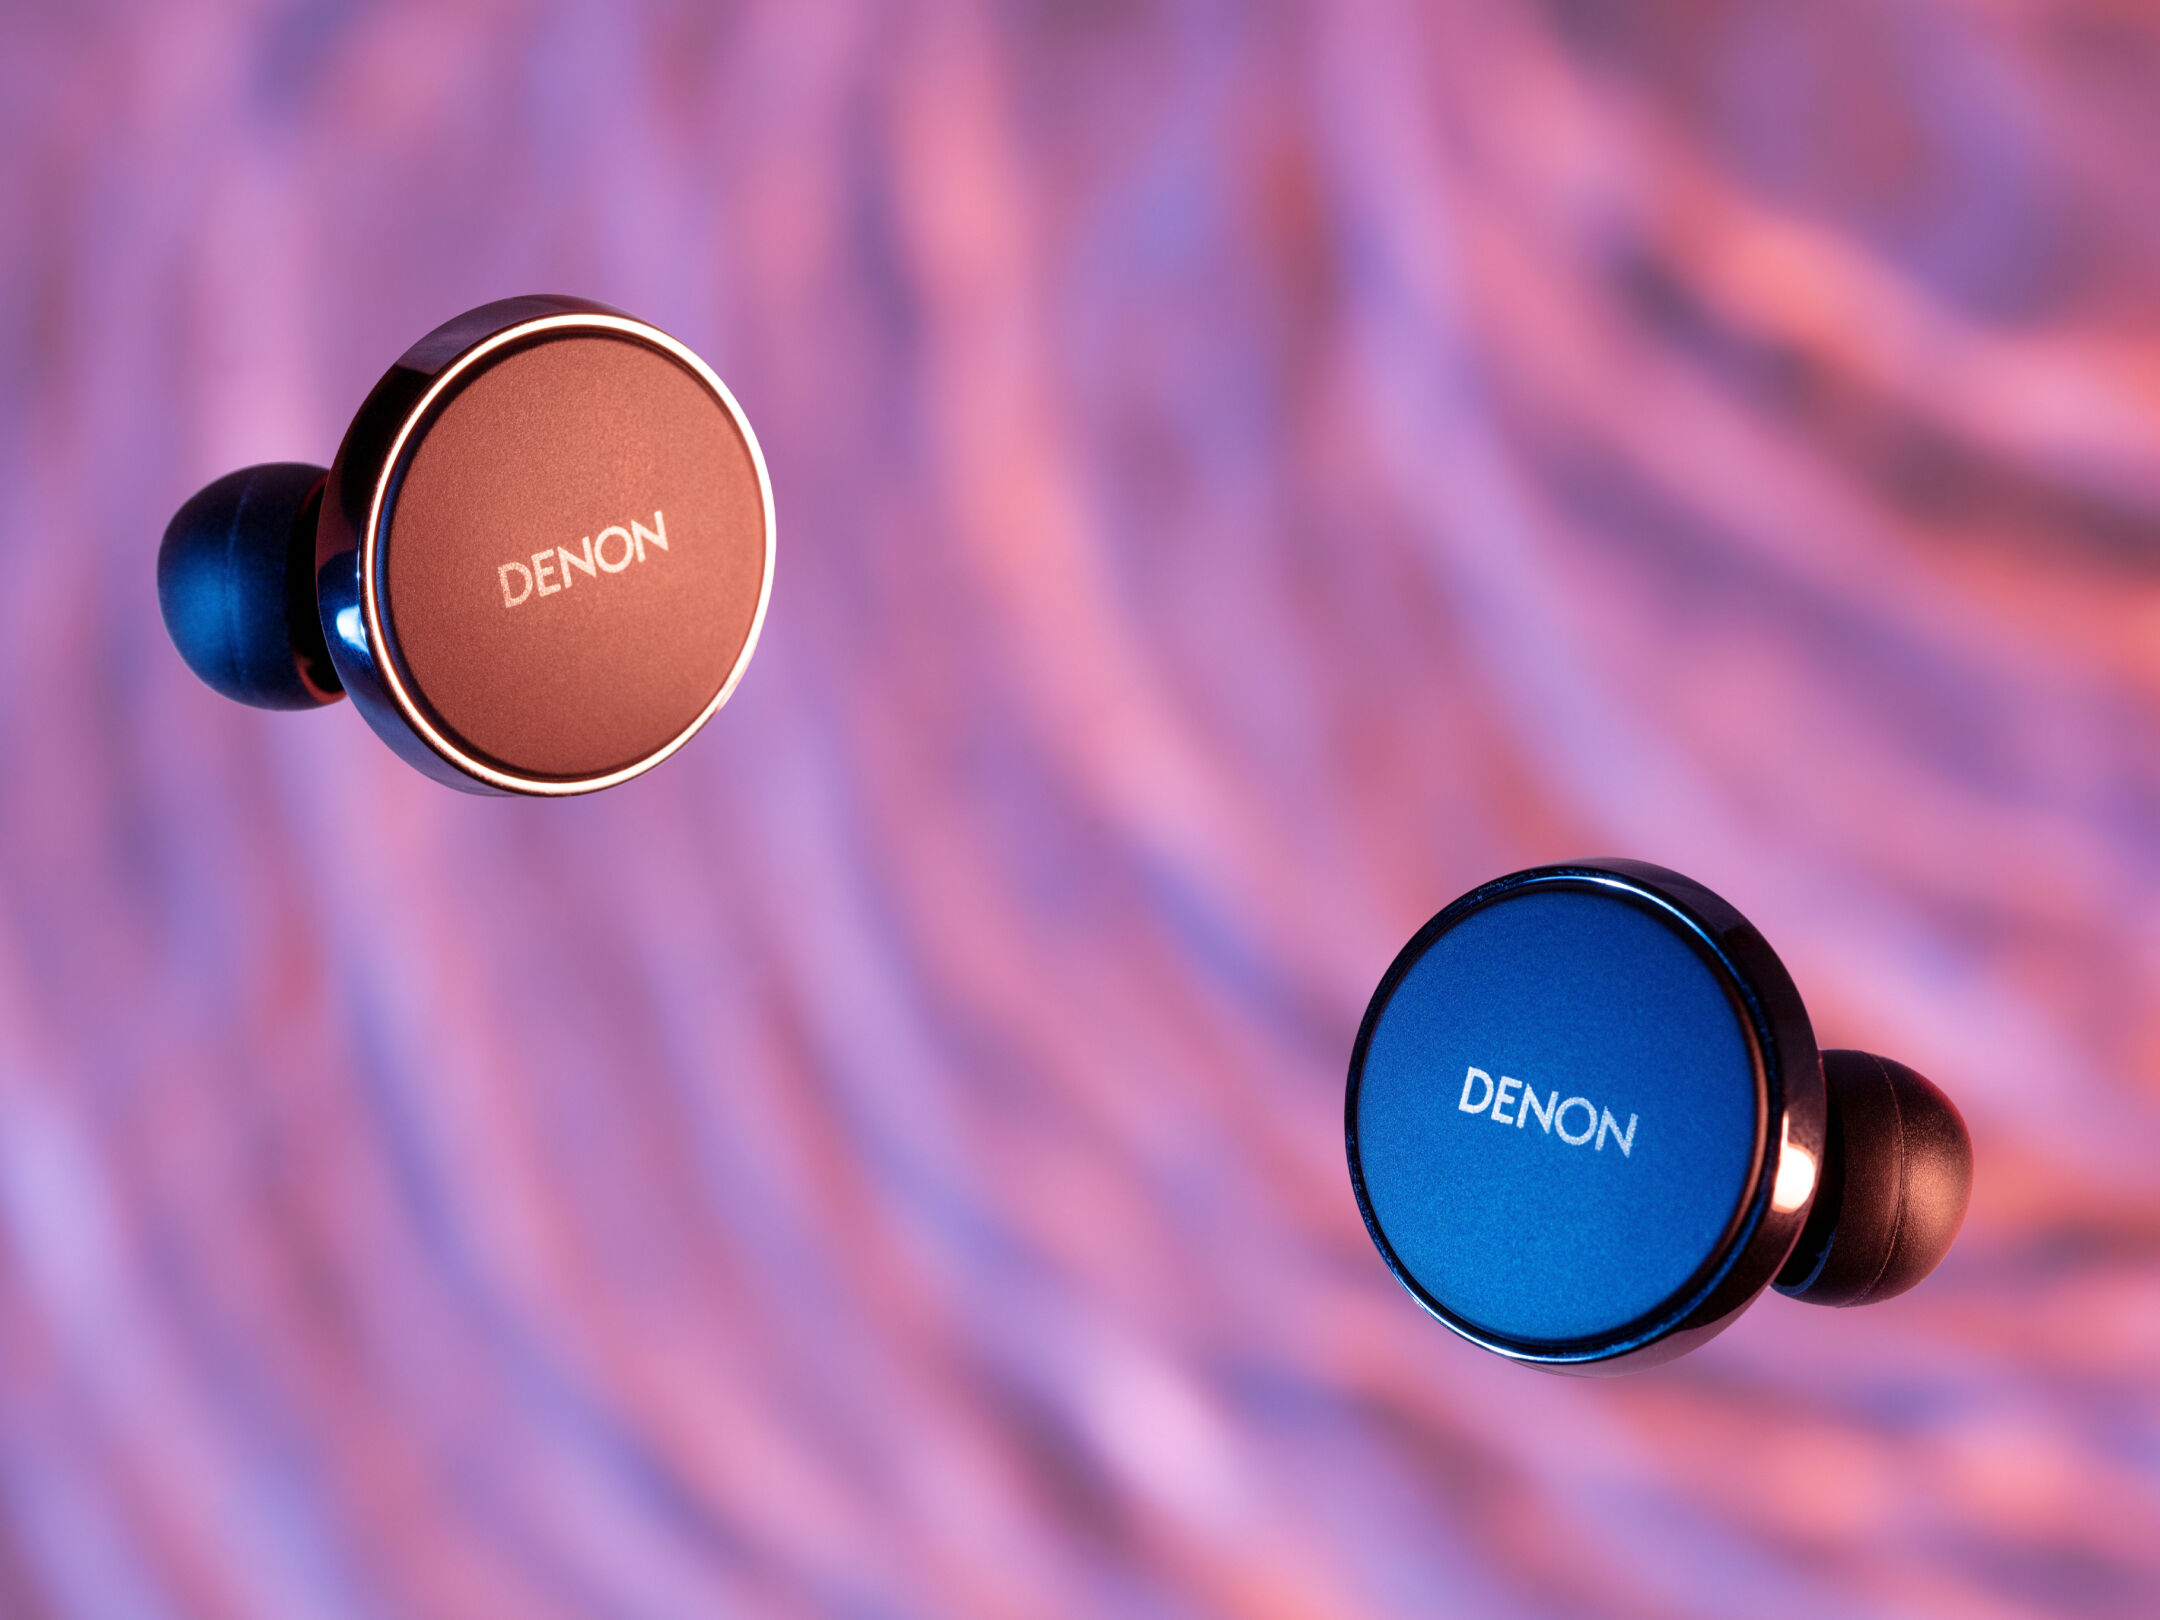 Denon PerL Pro - Premium True Wireless earbuds with personalized